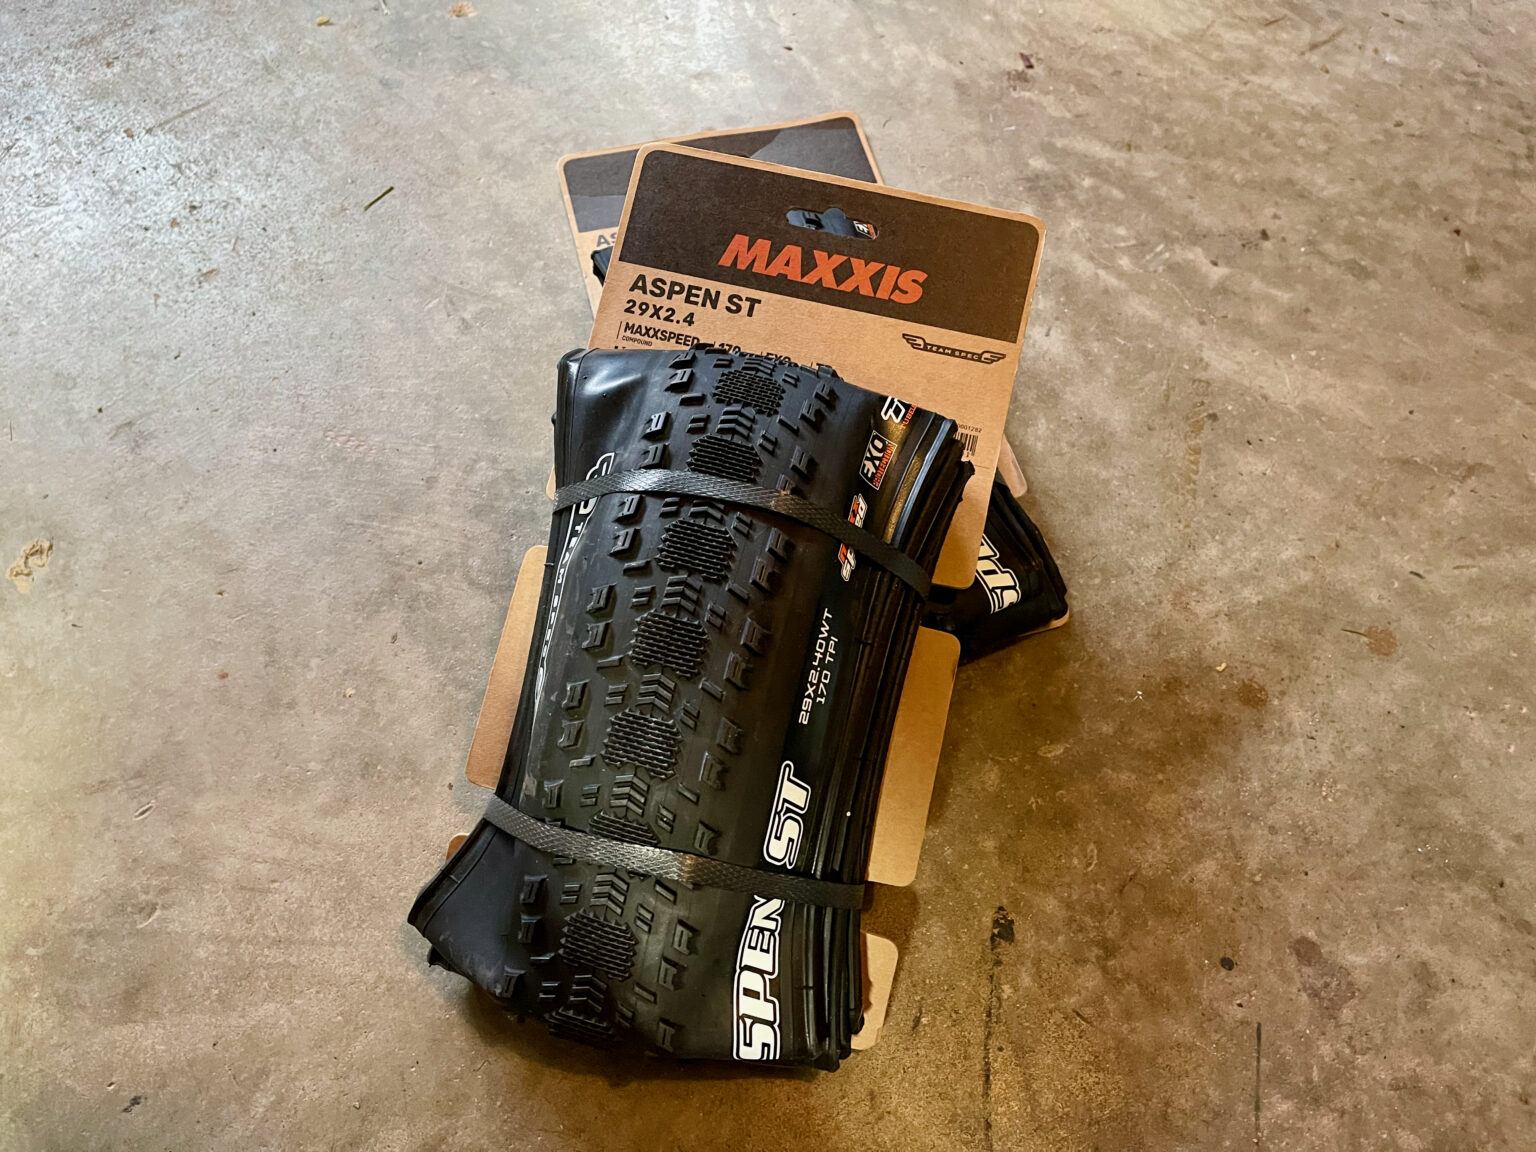 Maxxis Aspen ST packaging